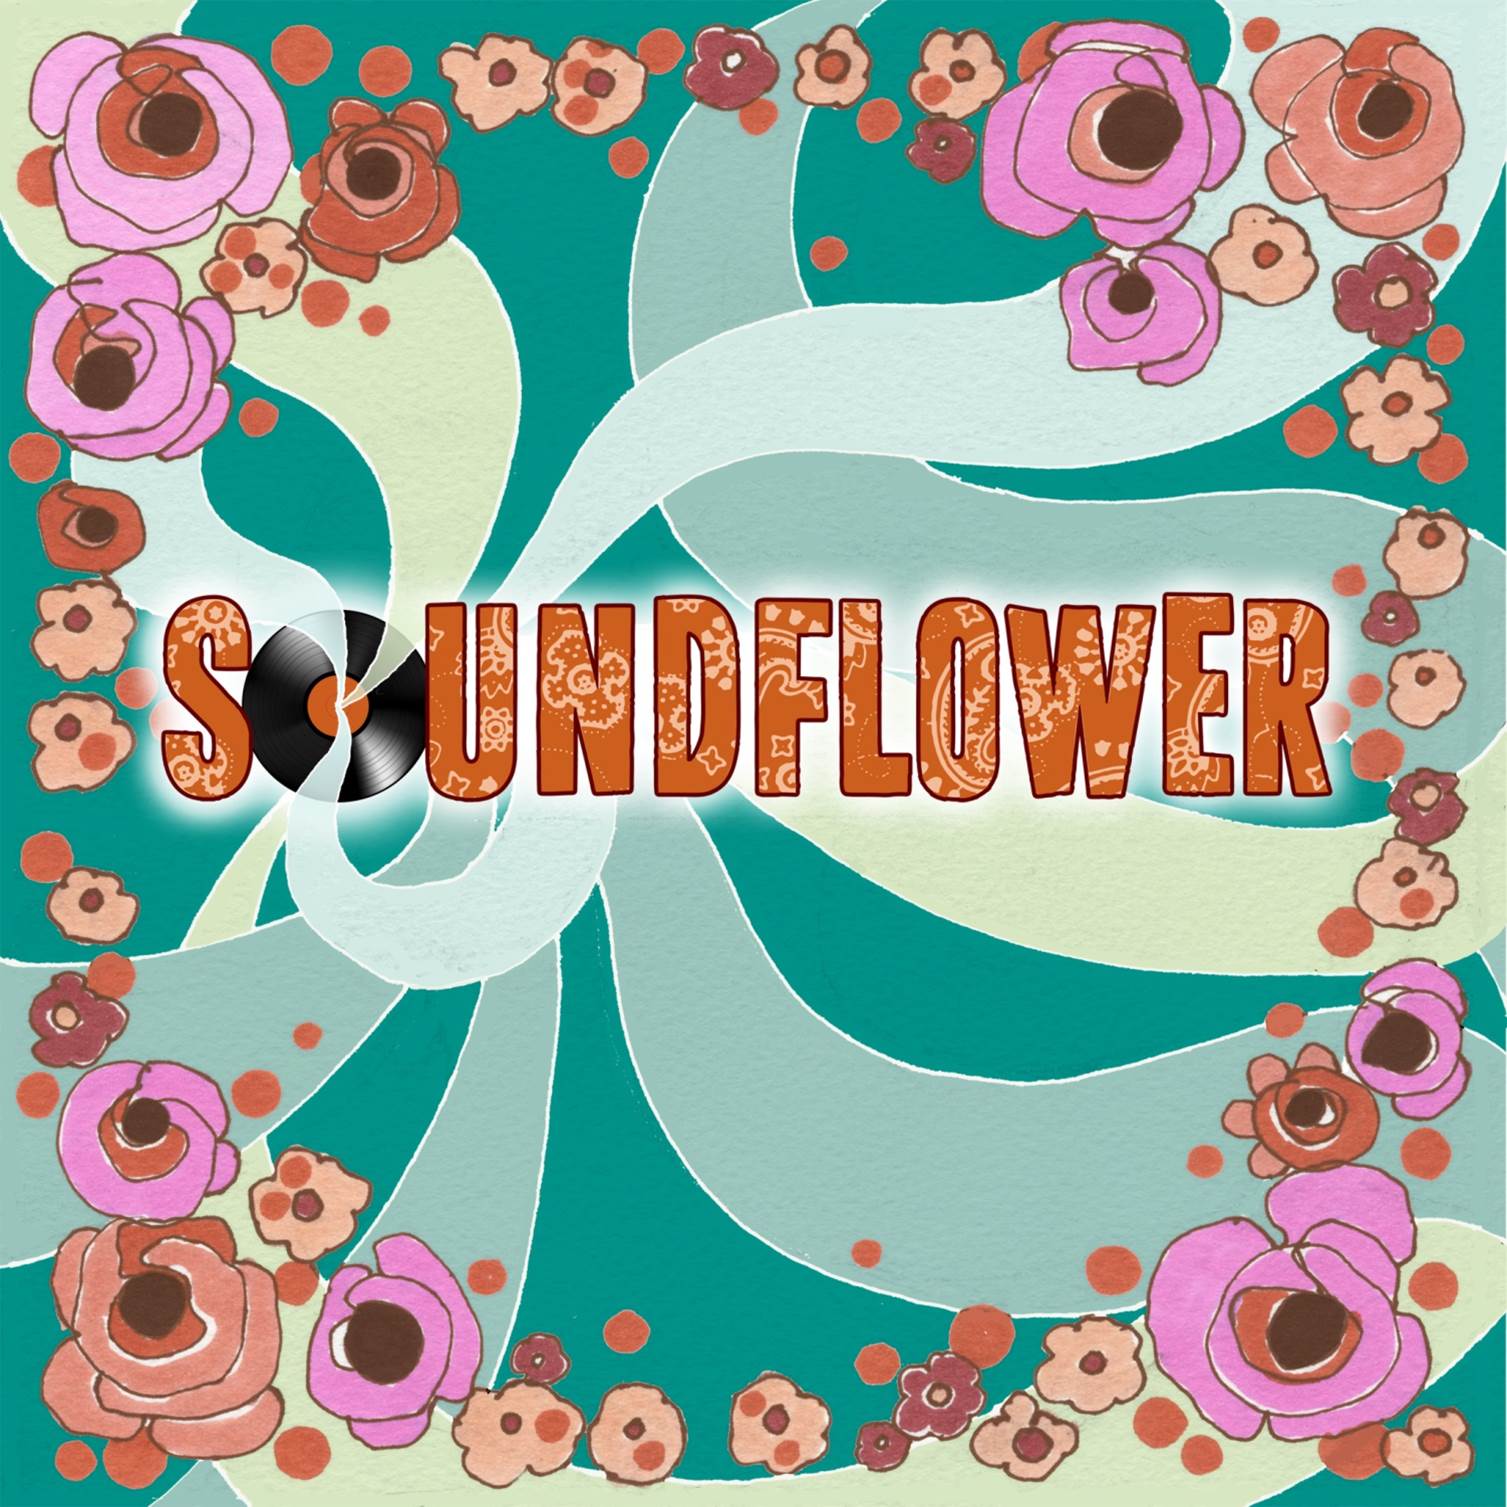 soundflower 64